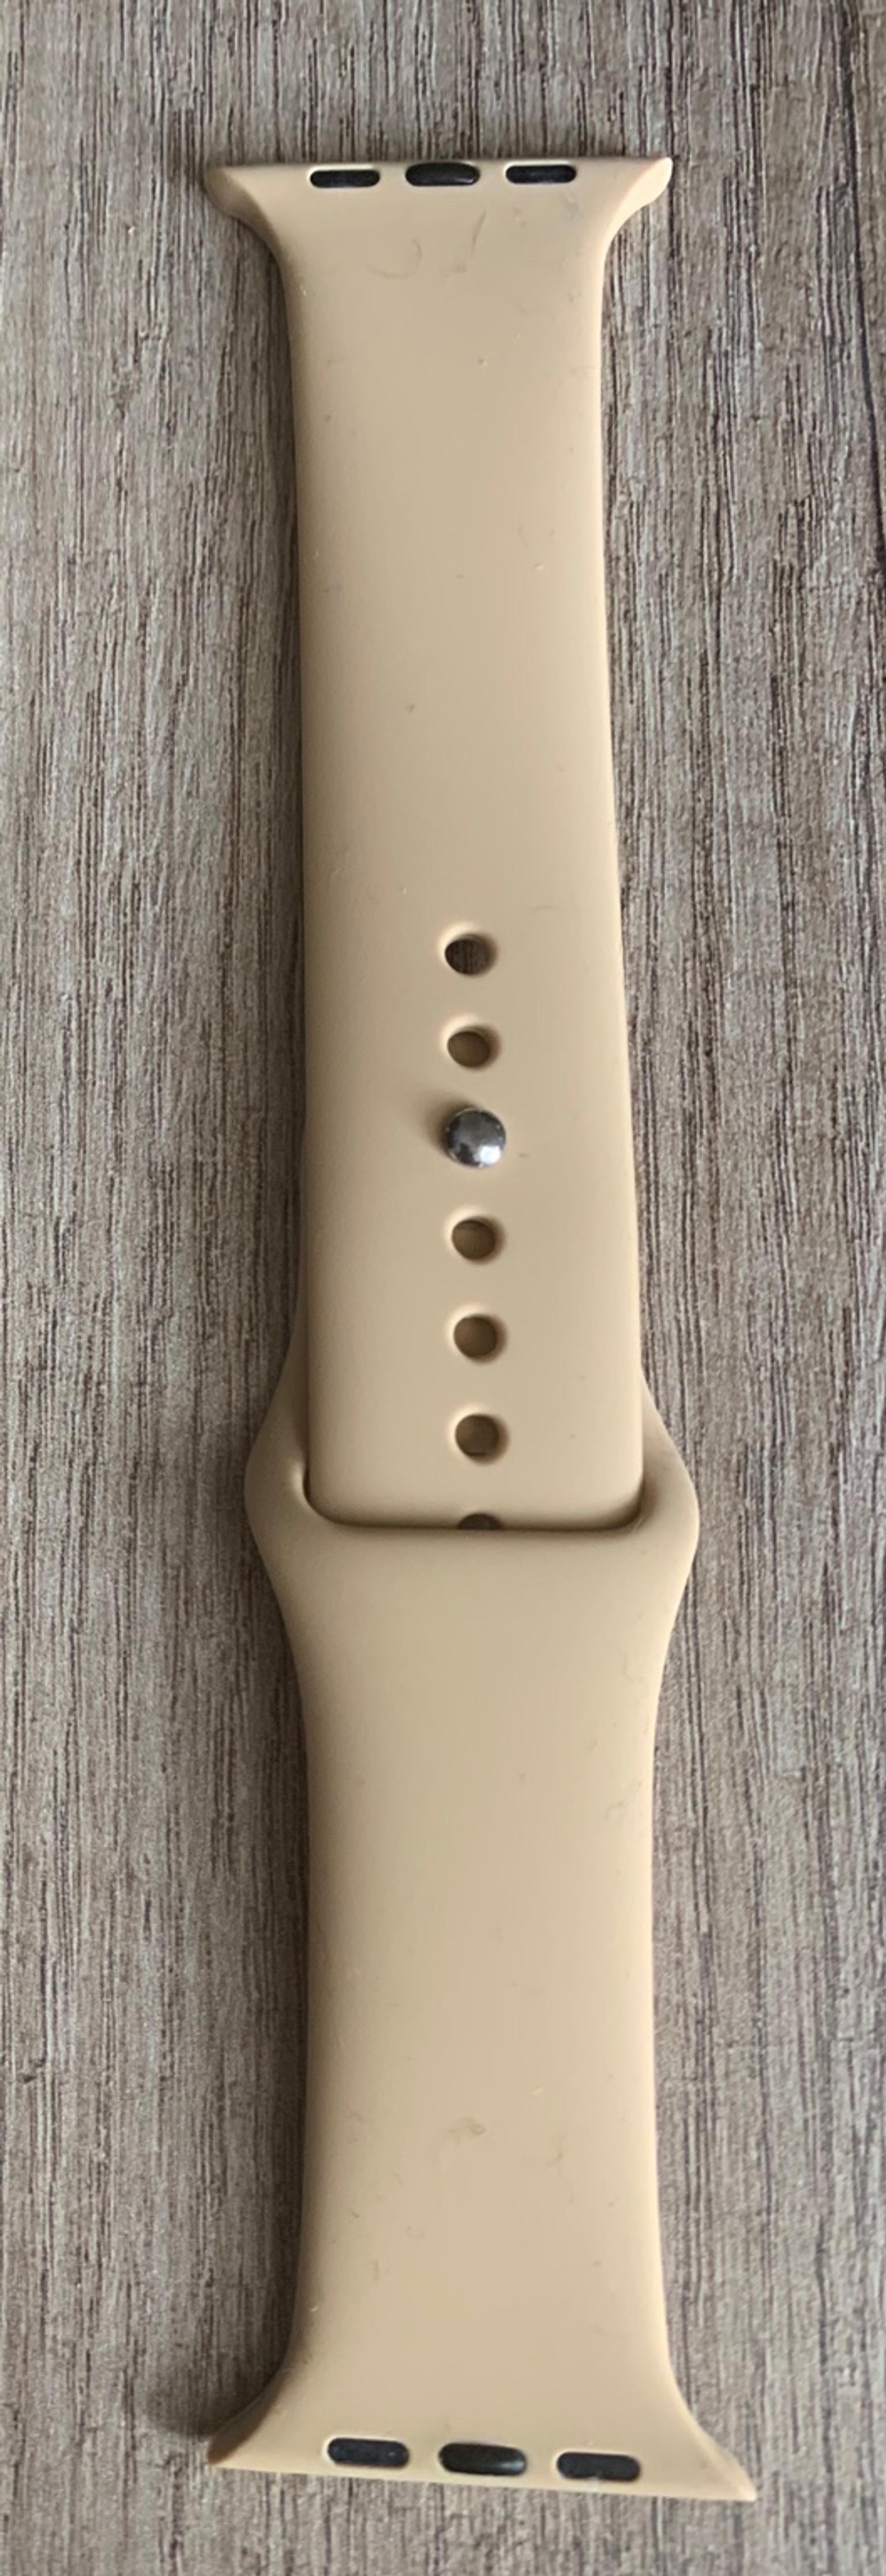 Apple Watch Silikon Armband In 6322 Kirchbichl For 00 For Sale Shpock